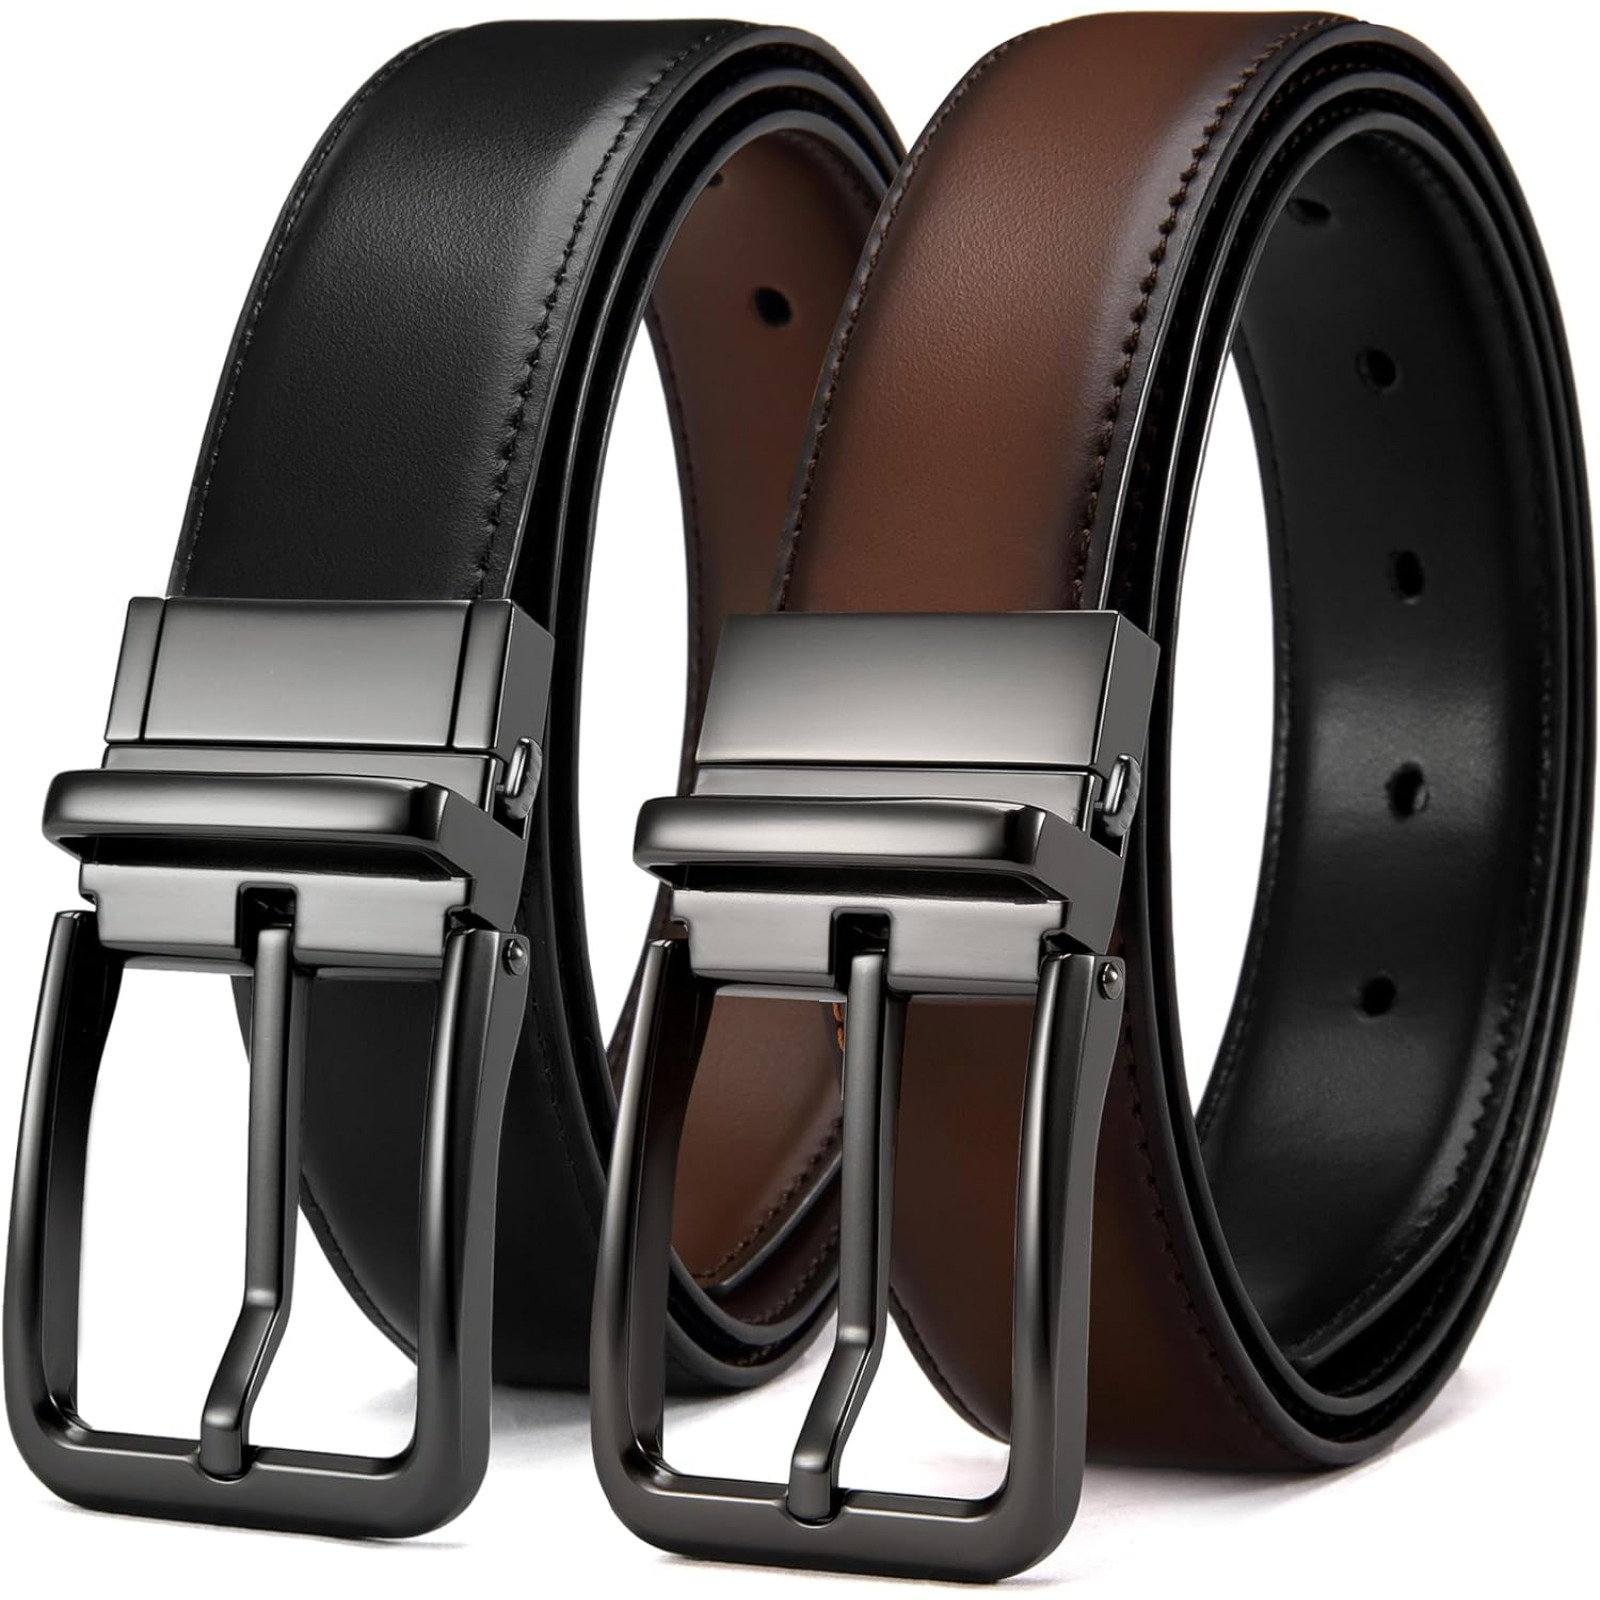 

Chaoren Leather Reversible Belt For Men 1 3/8" For Dress Pants - 2 Styles In 1 Belt